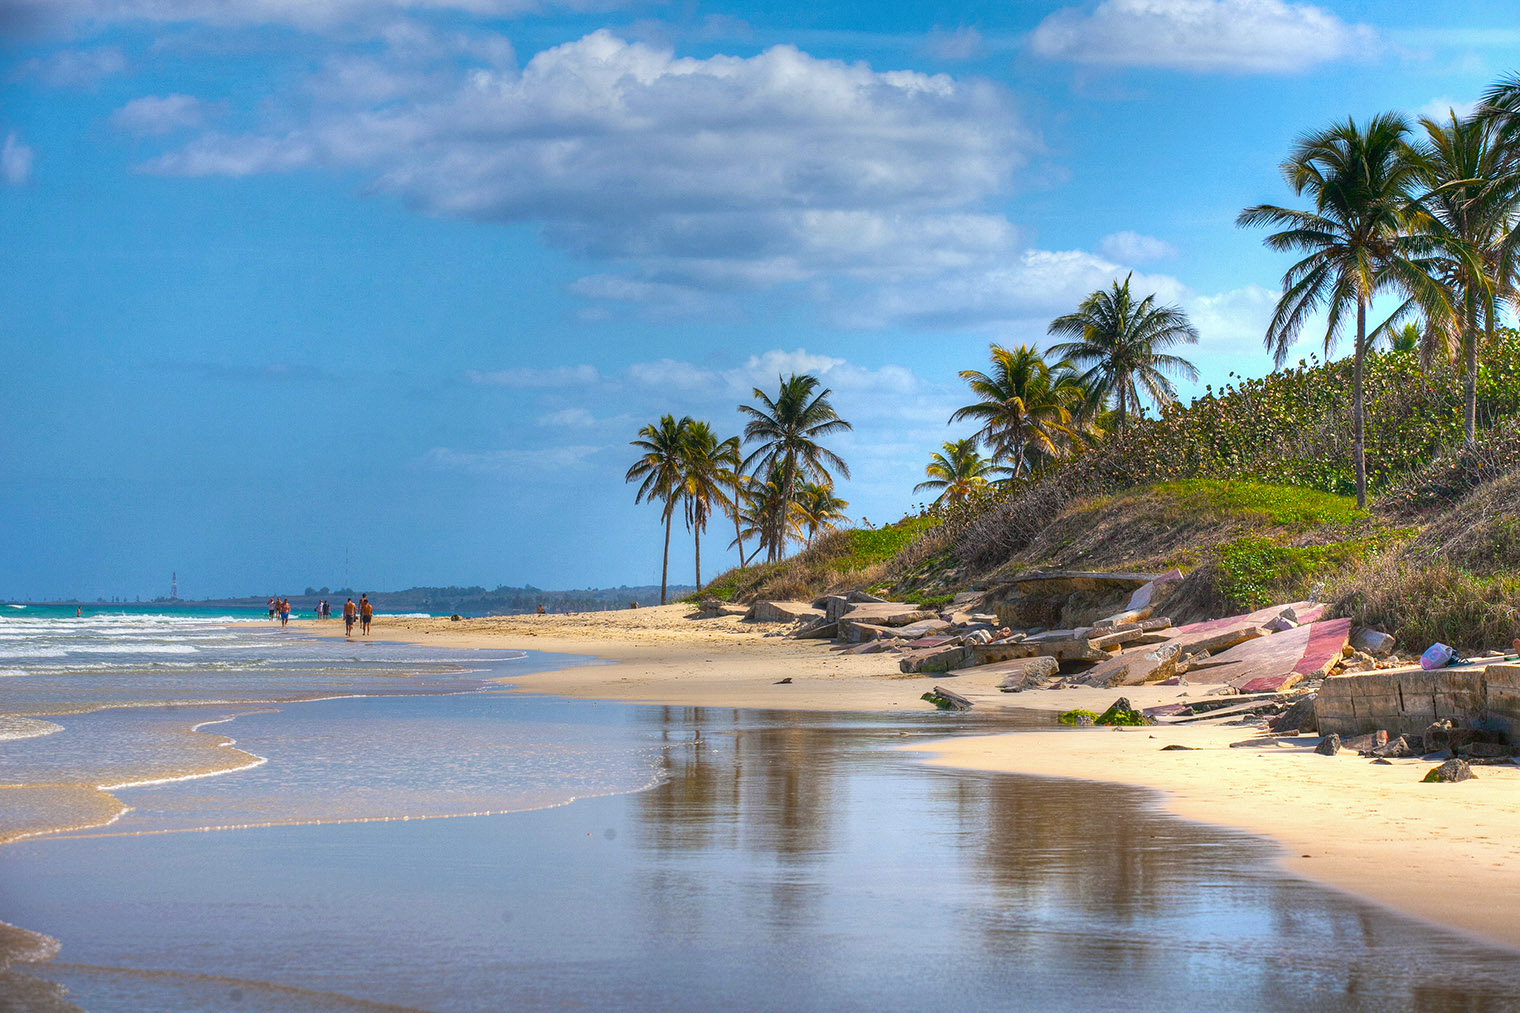 Пляж в Гаване. Фотография: Denis Turavtsov / Shutterstock / FOTODOM